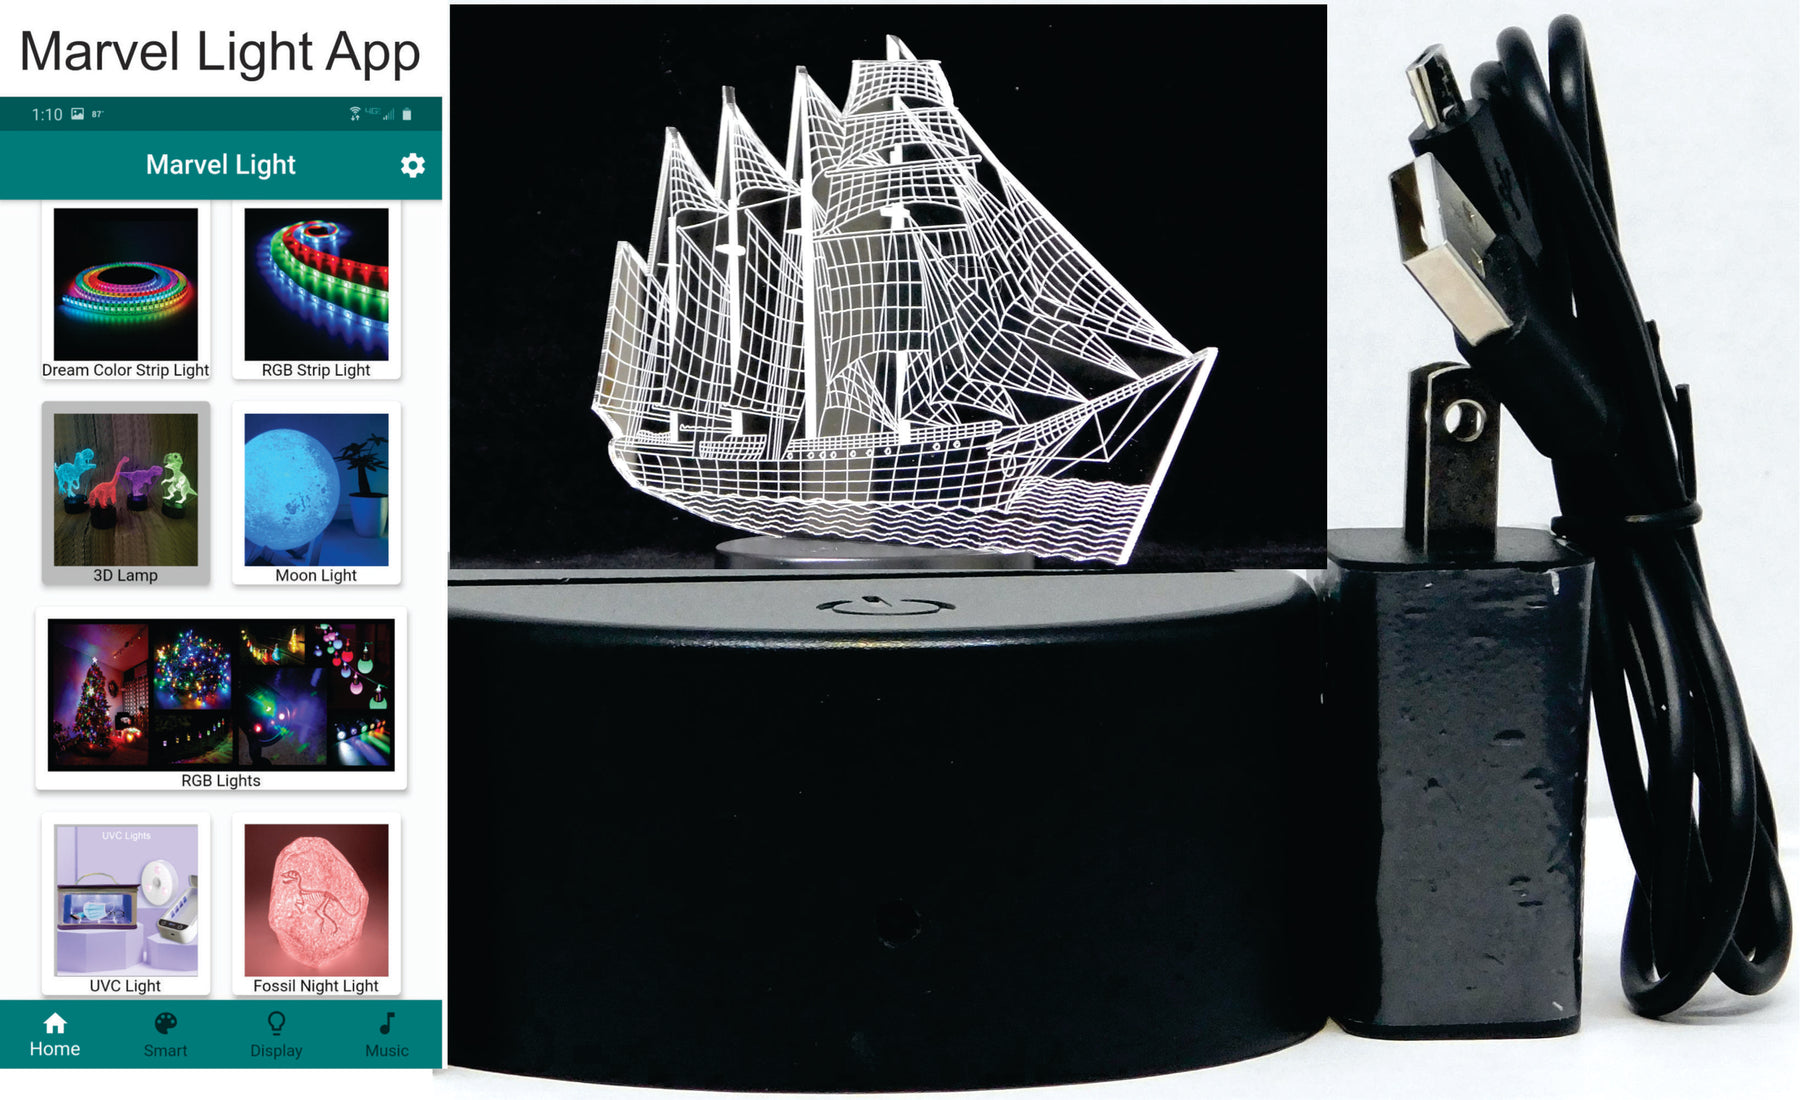 Sailing Ship 3-D Optical Illusion LED Desk, Table, Night Lamp